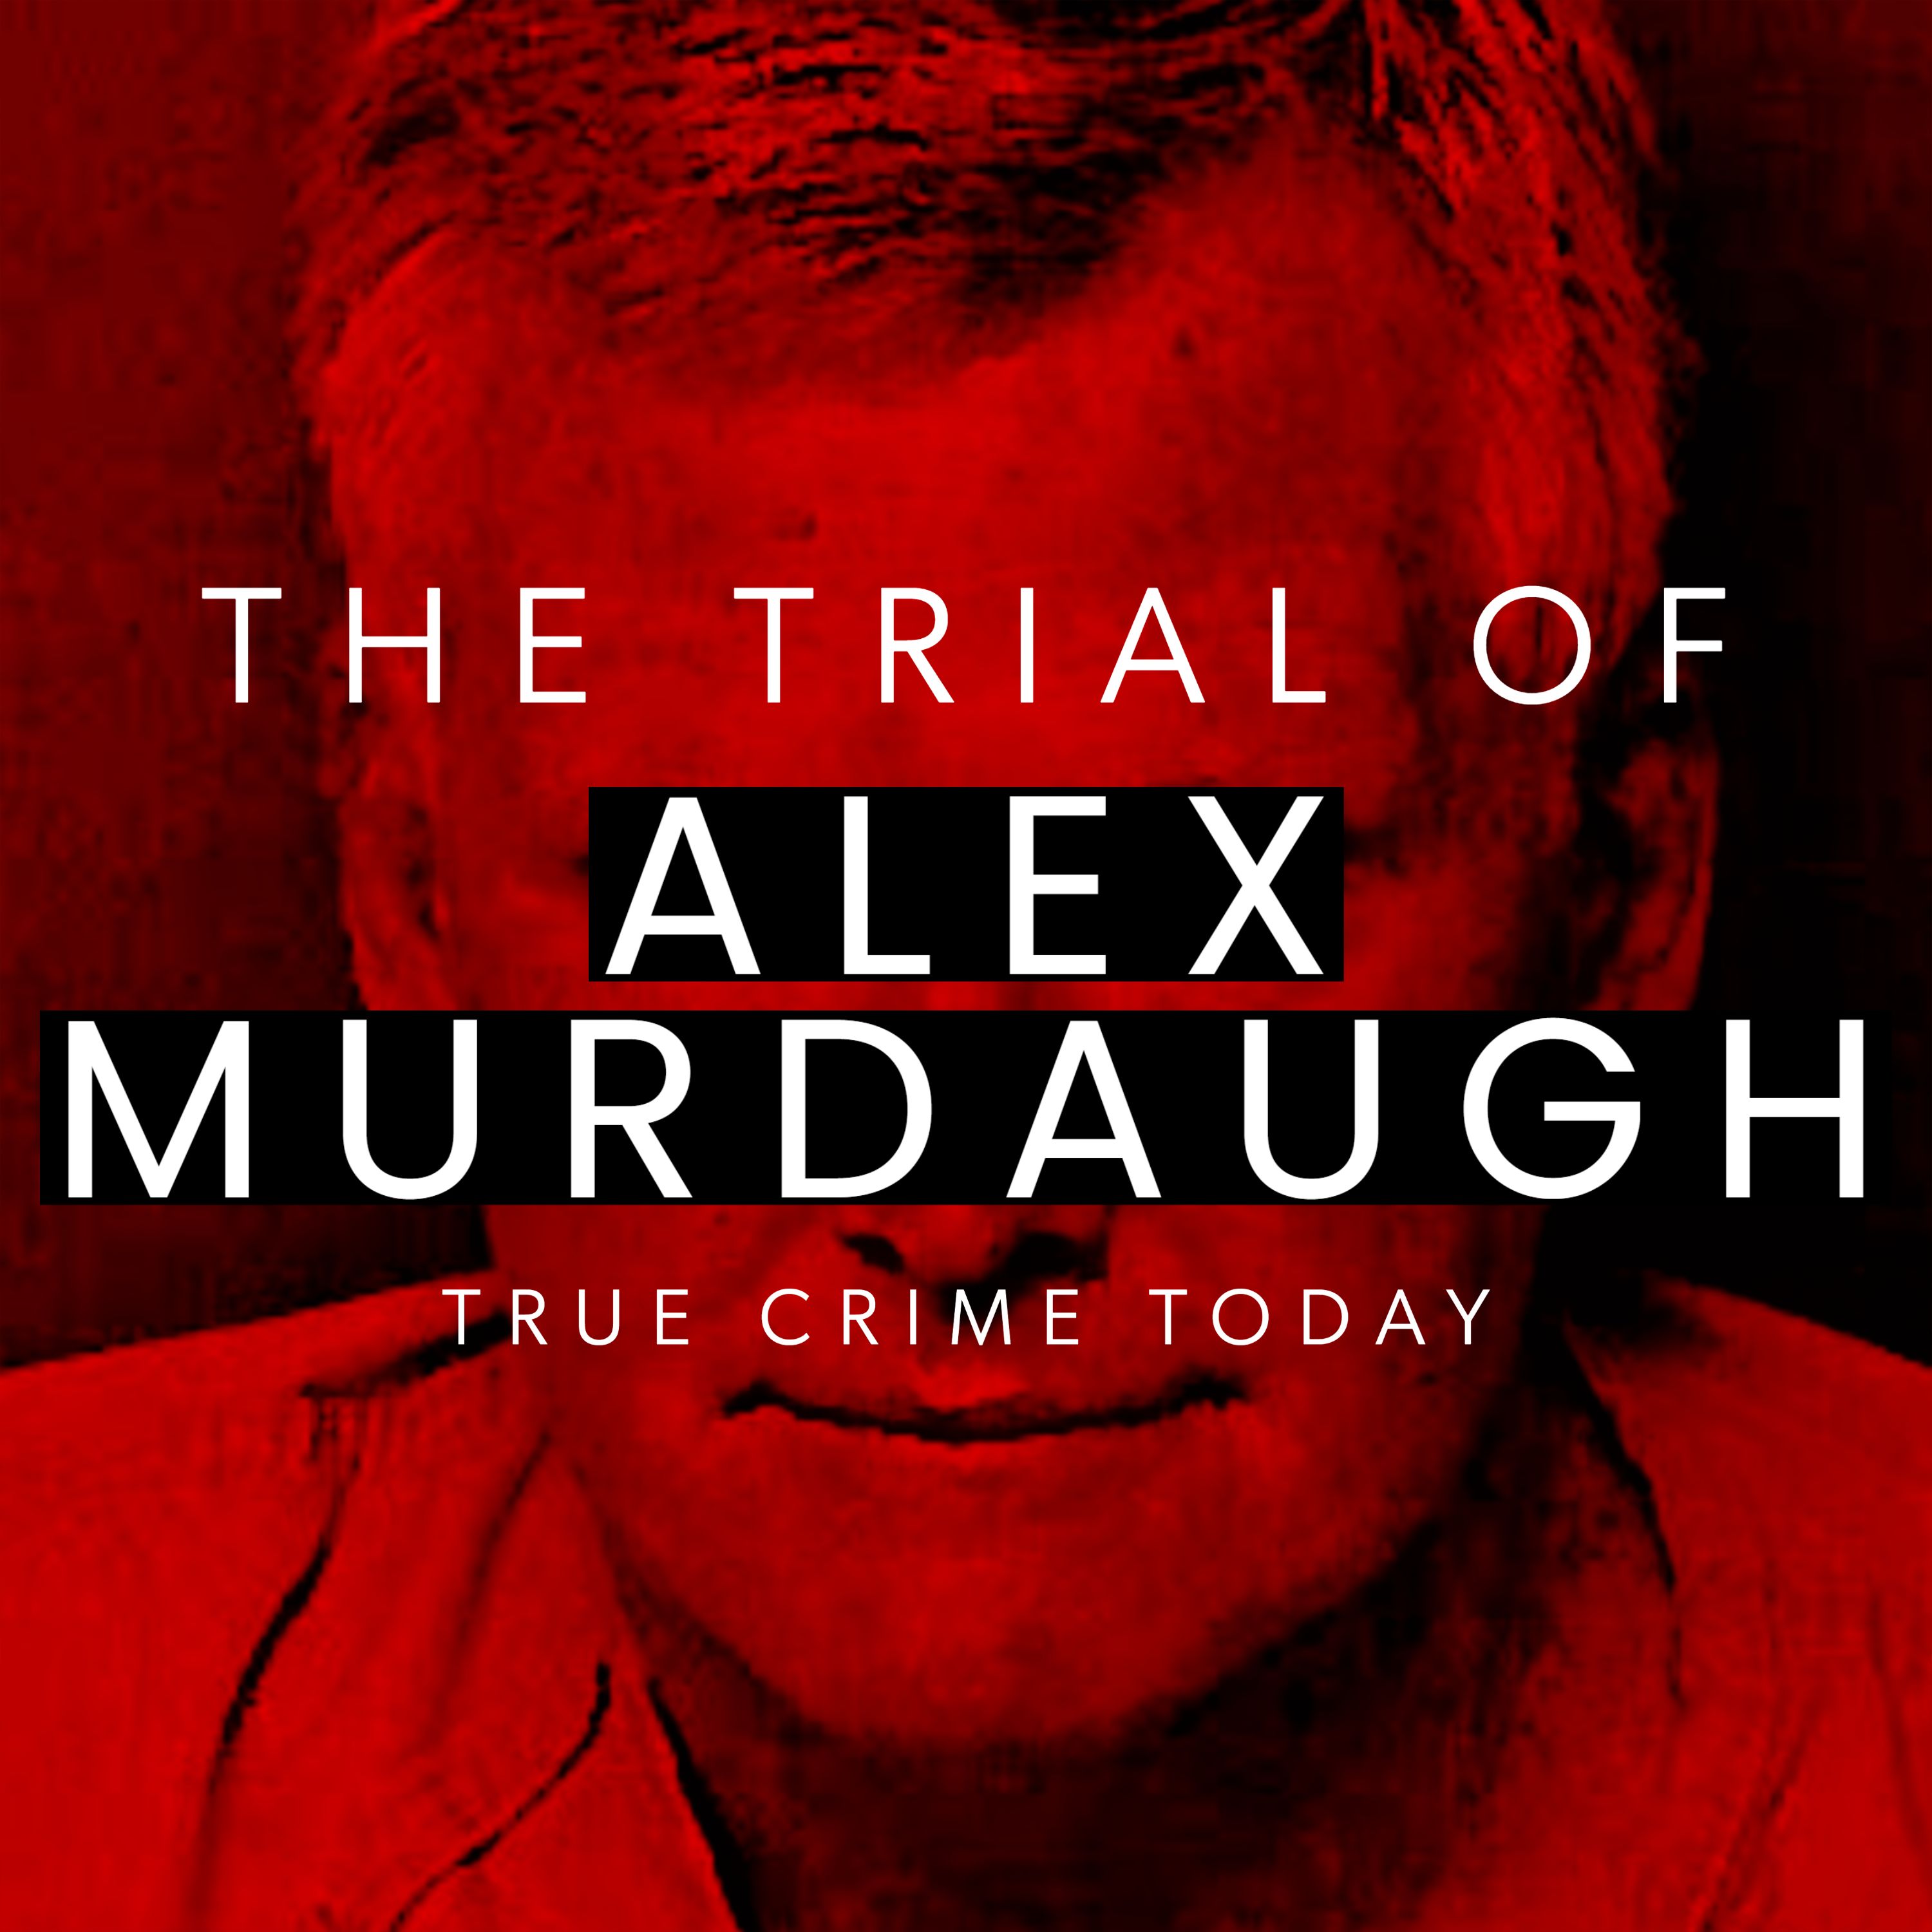 Murdaugh Financial Crime Sentencing-RAW COURTROOM AUDIO Part 1